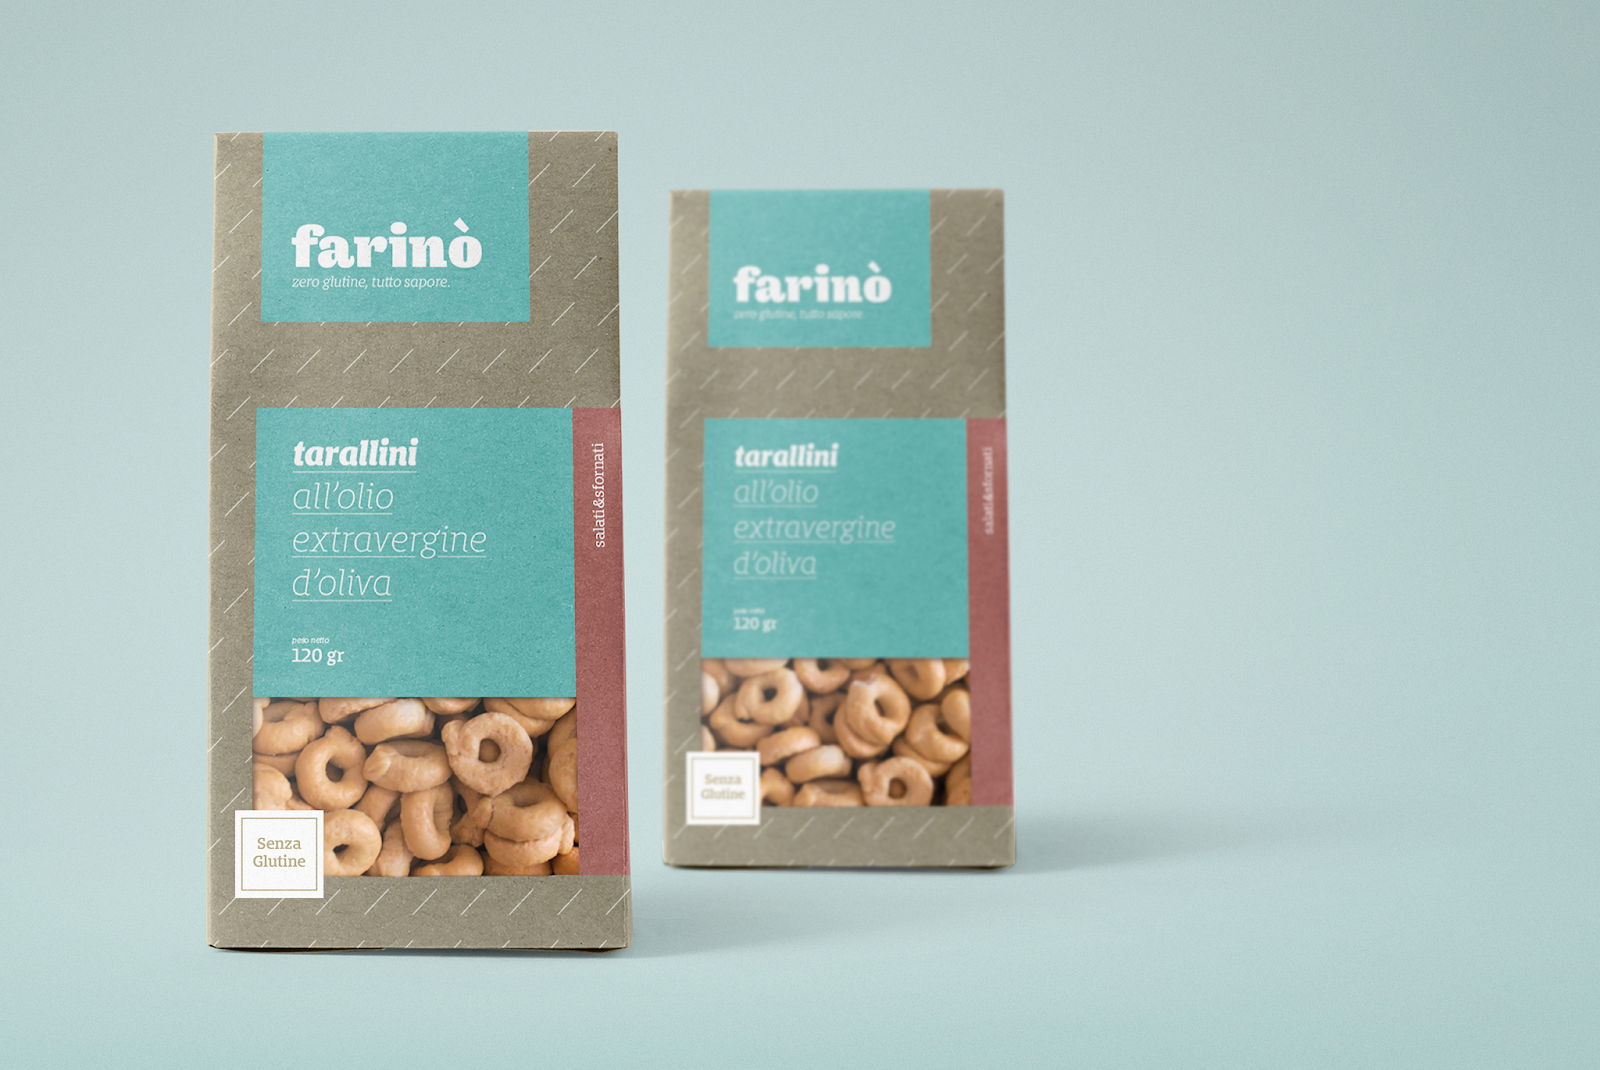 Farinò无麸质面包店品牌和包装设计